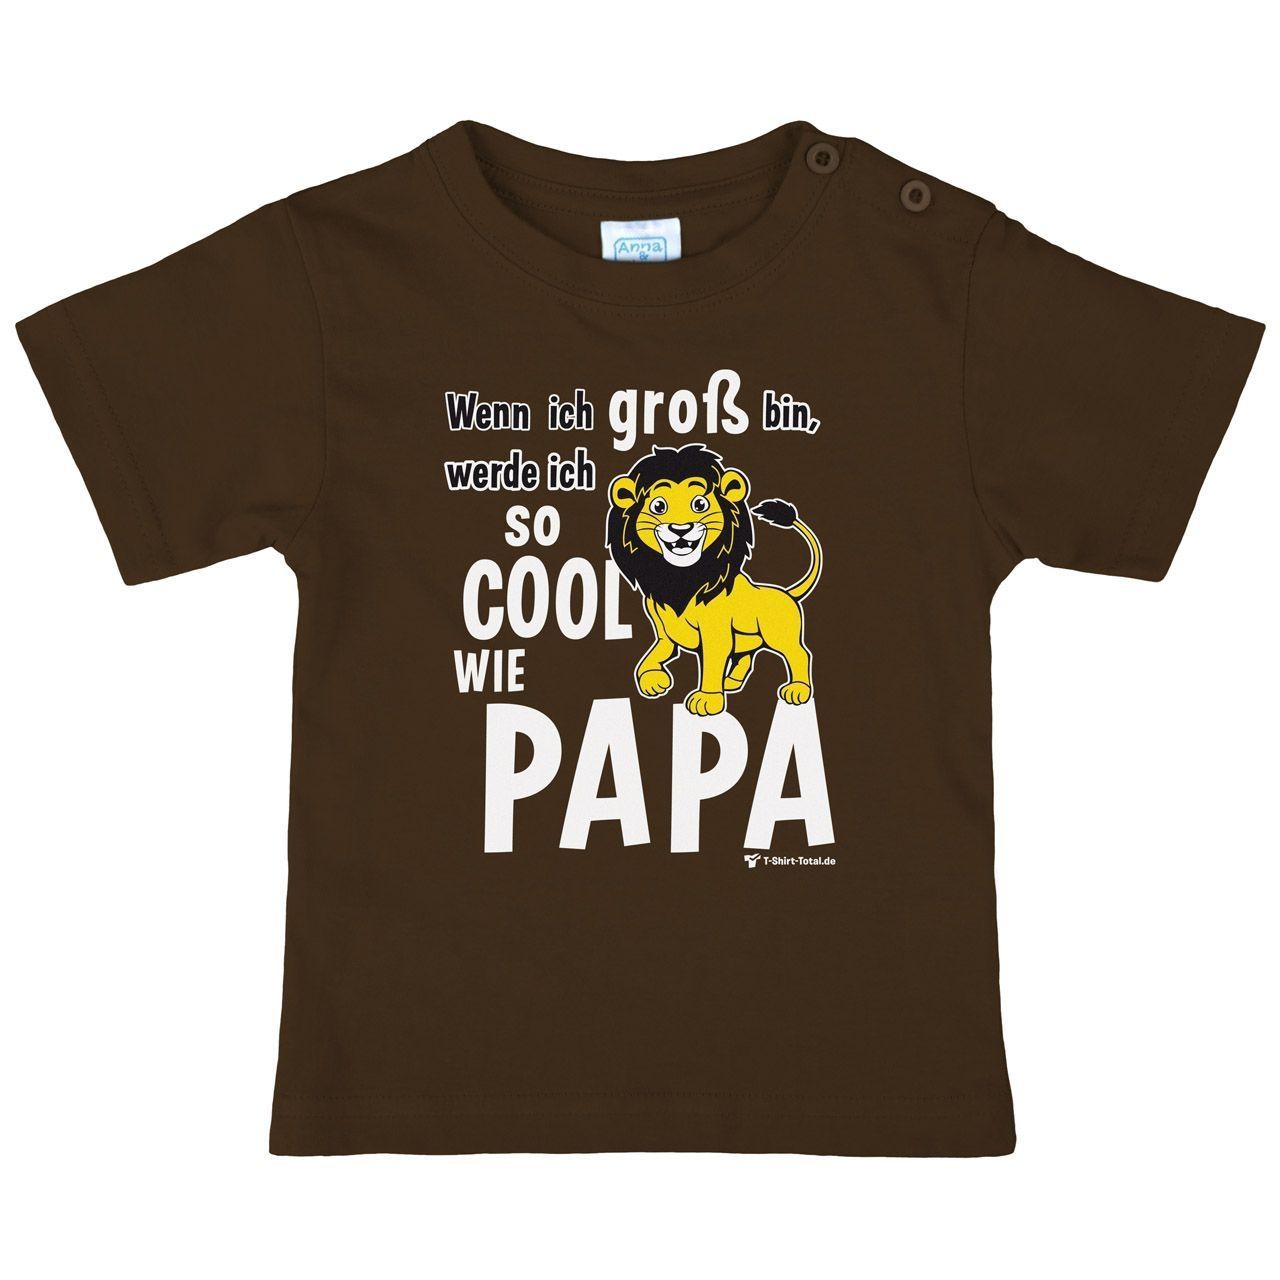 Cool wie Papa Löwe Kinder T-Shirt braun 68 / 74